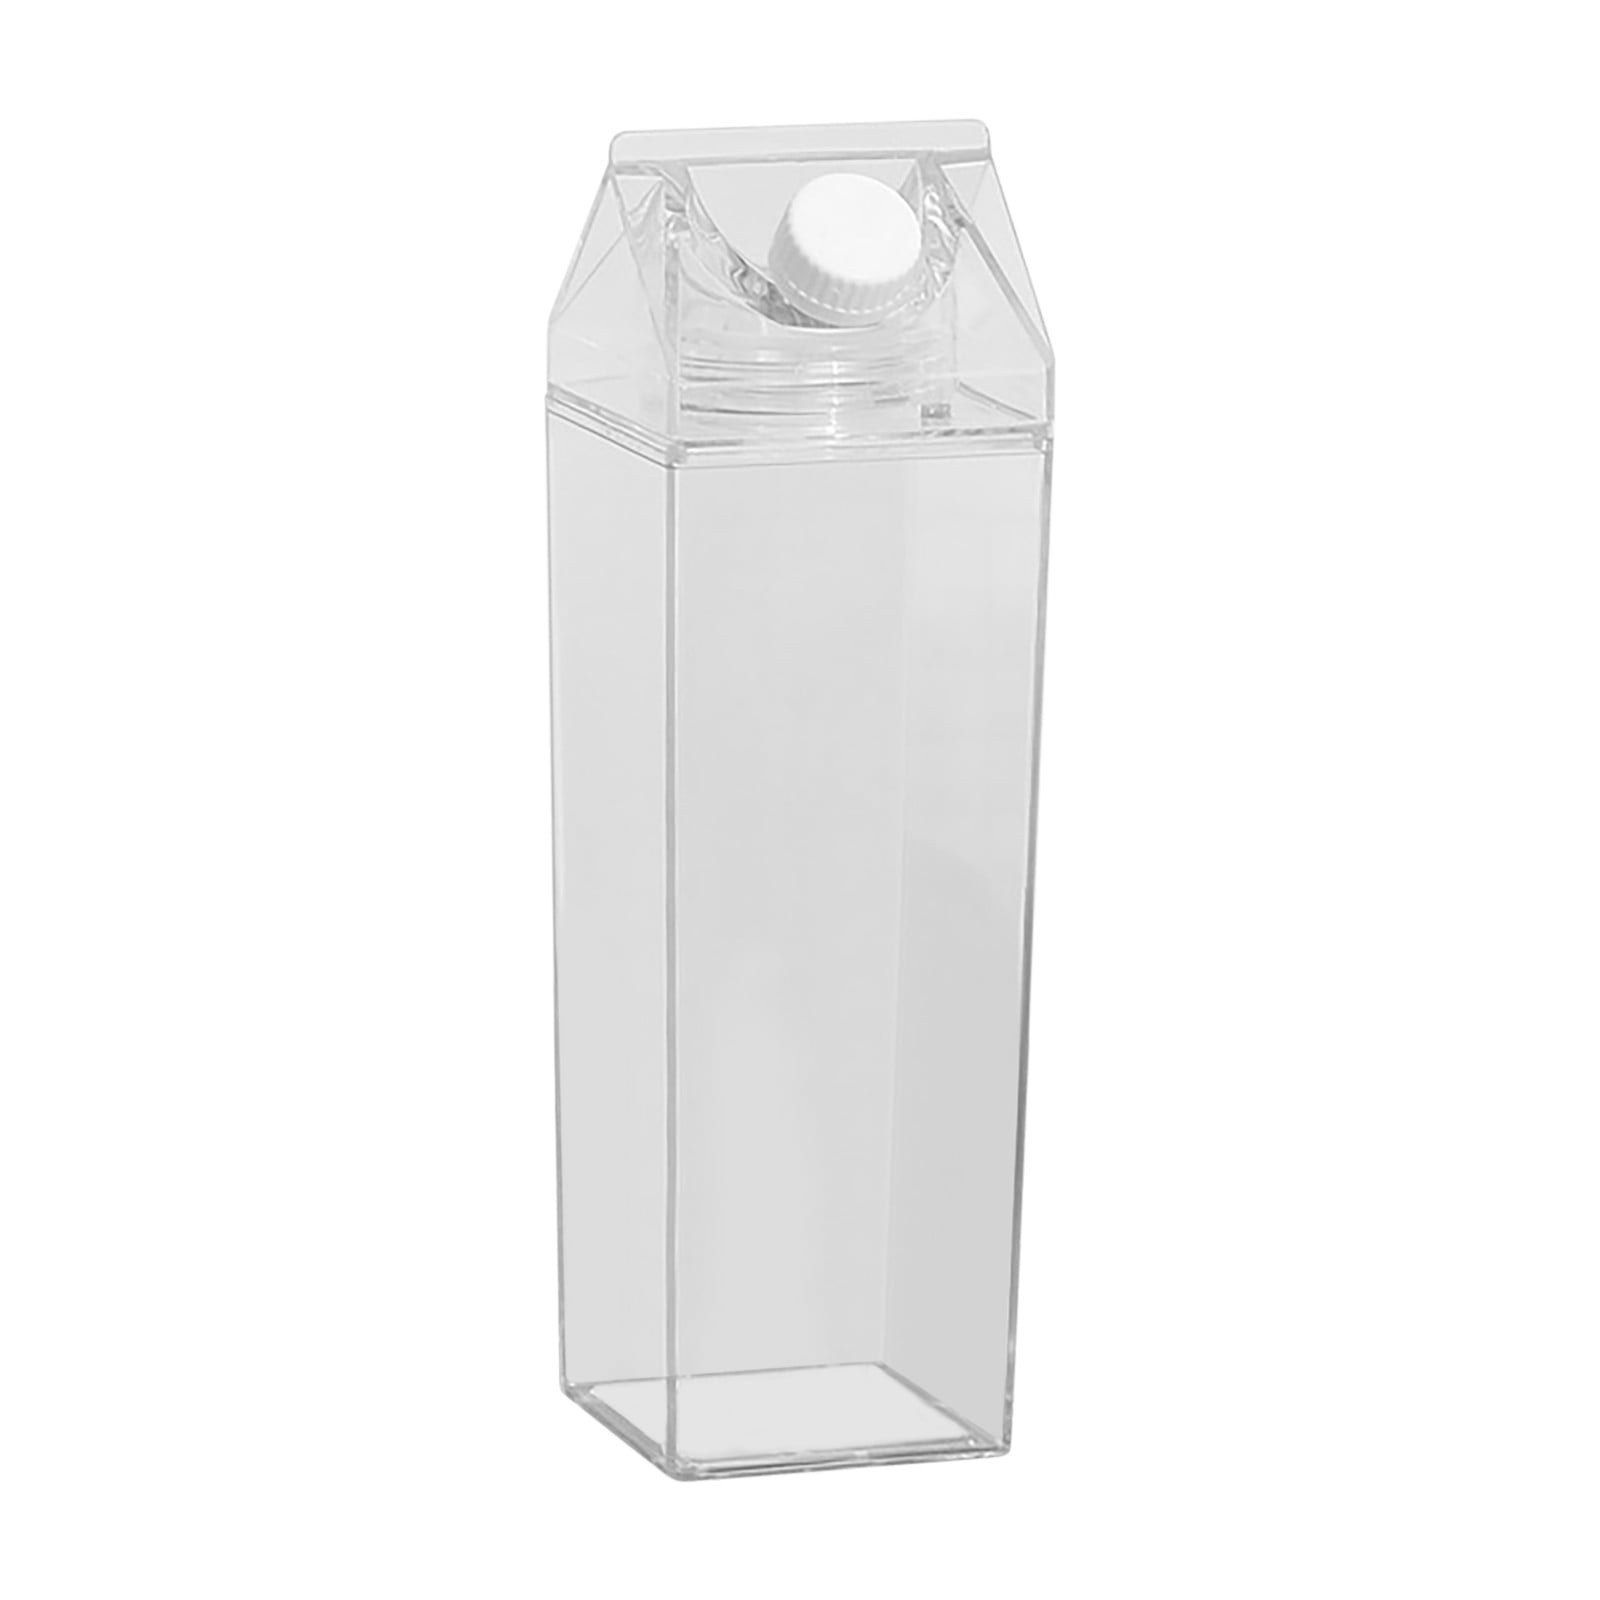 WQQZJJ Kitchen Supplies Christmas Sale Deals Milk Carton Water